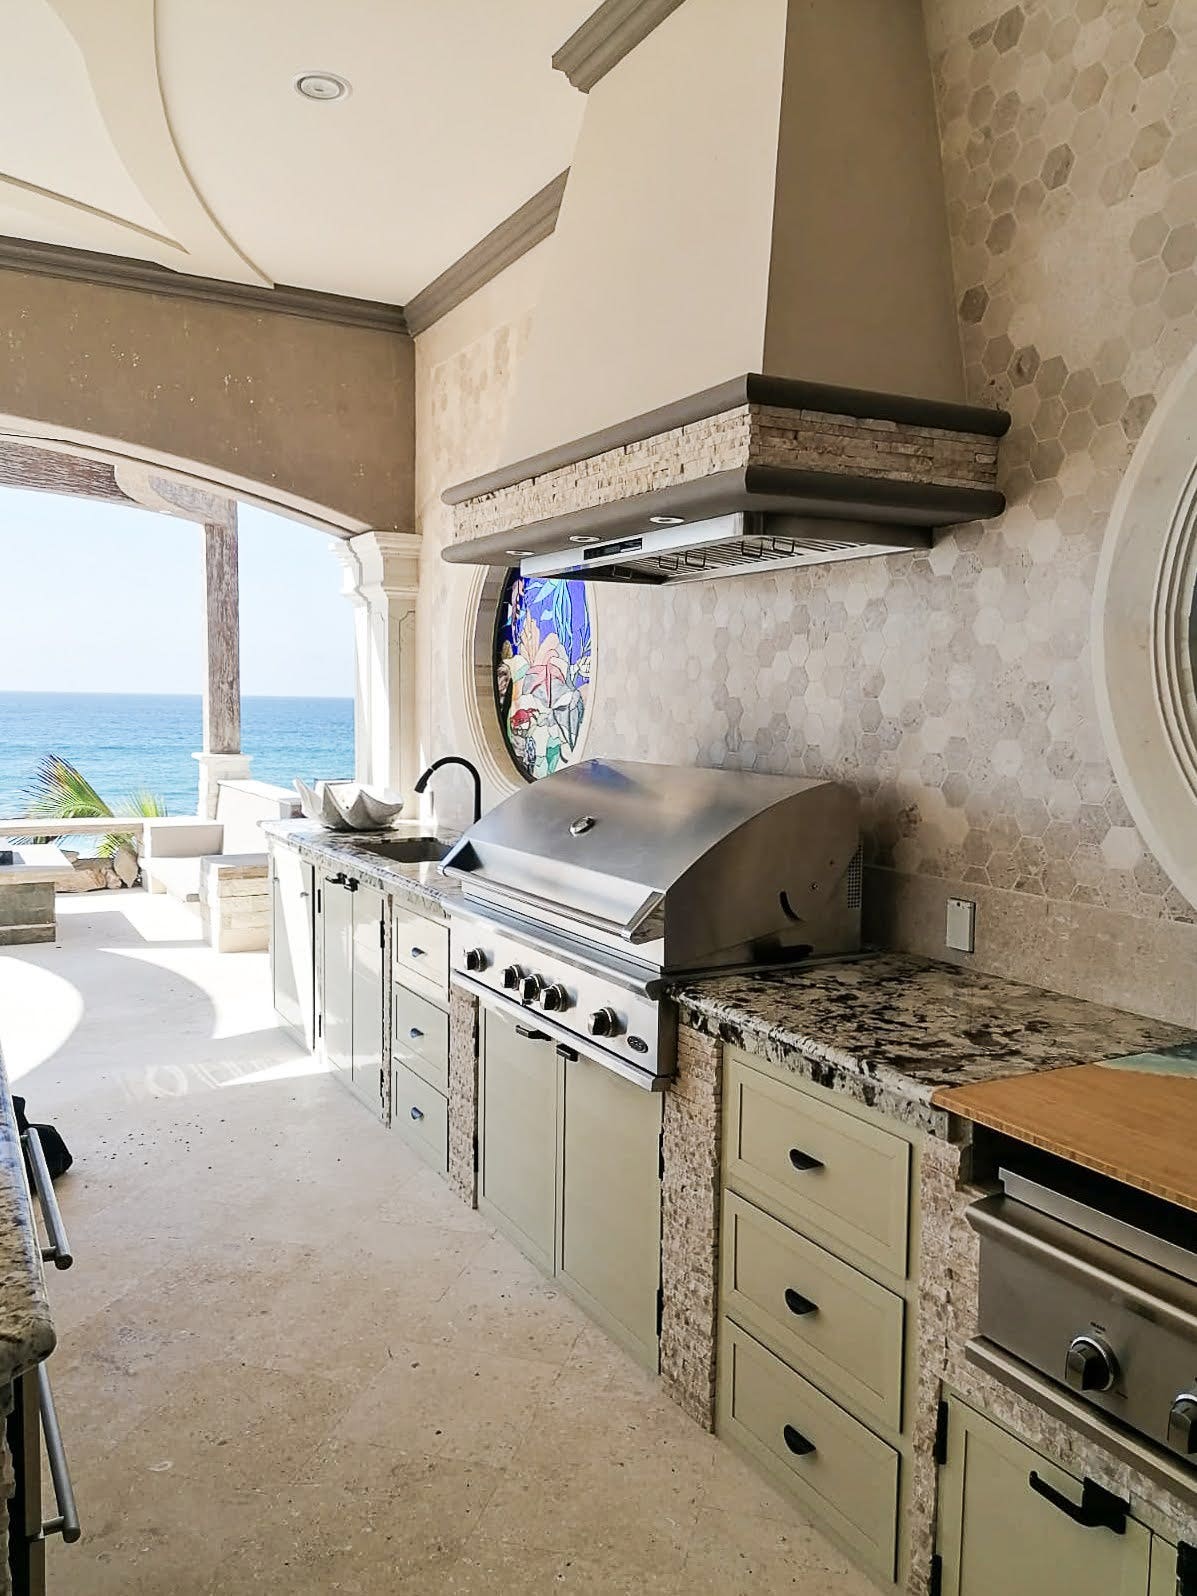 Luxurious beachfront outdoor kitchen with a Proline range hood, mosaic tile wall, and panoramic ocean views - prolinerangehoods.com